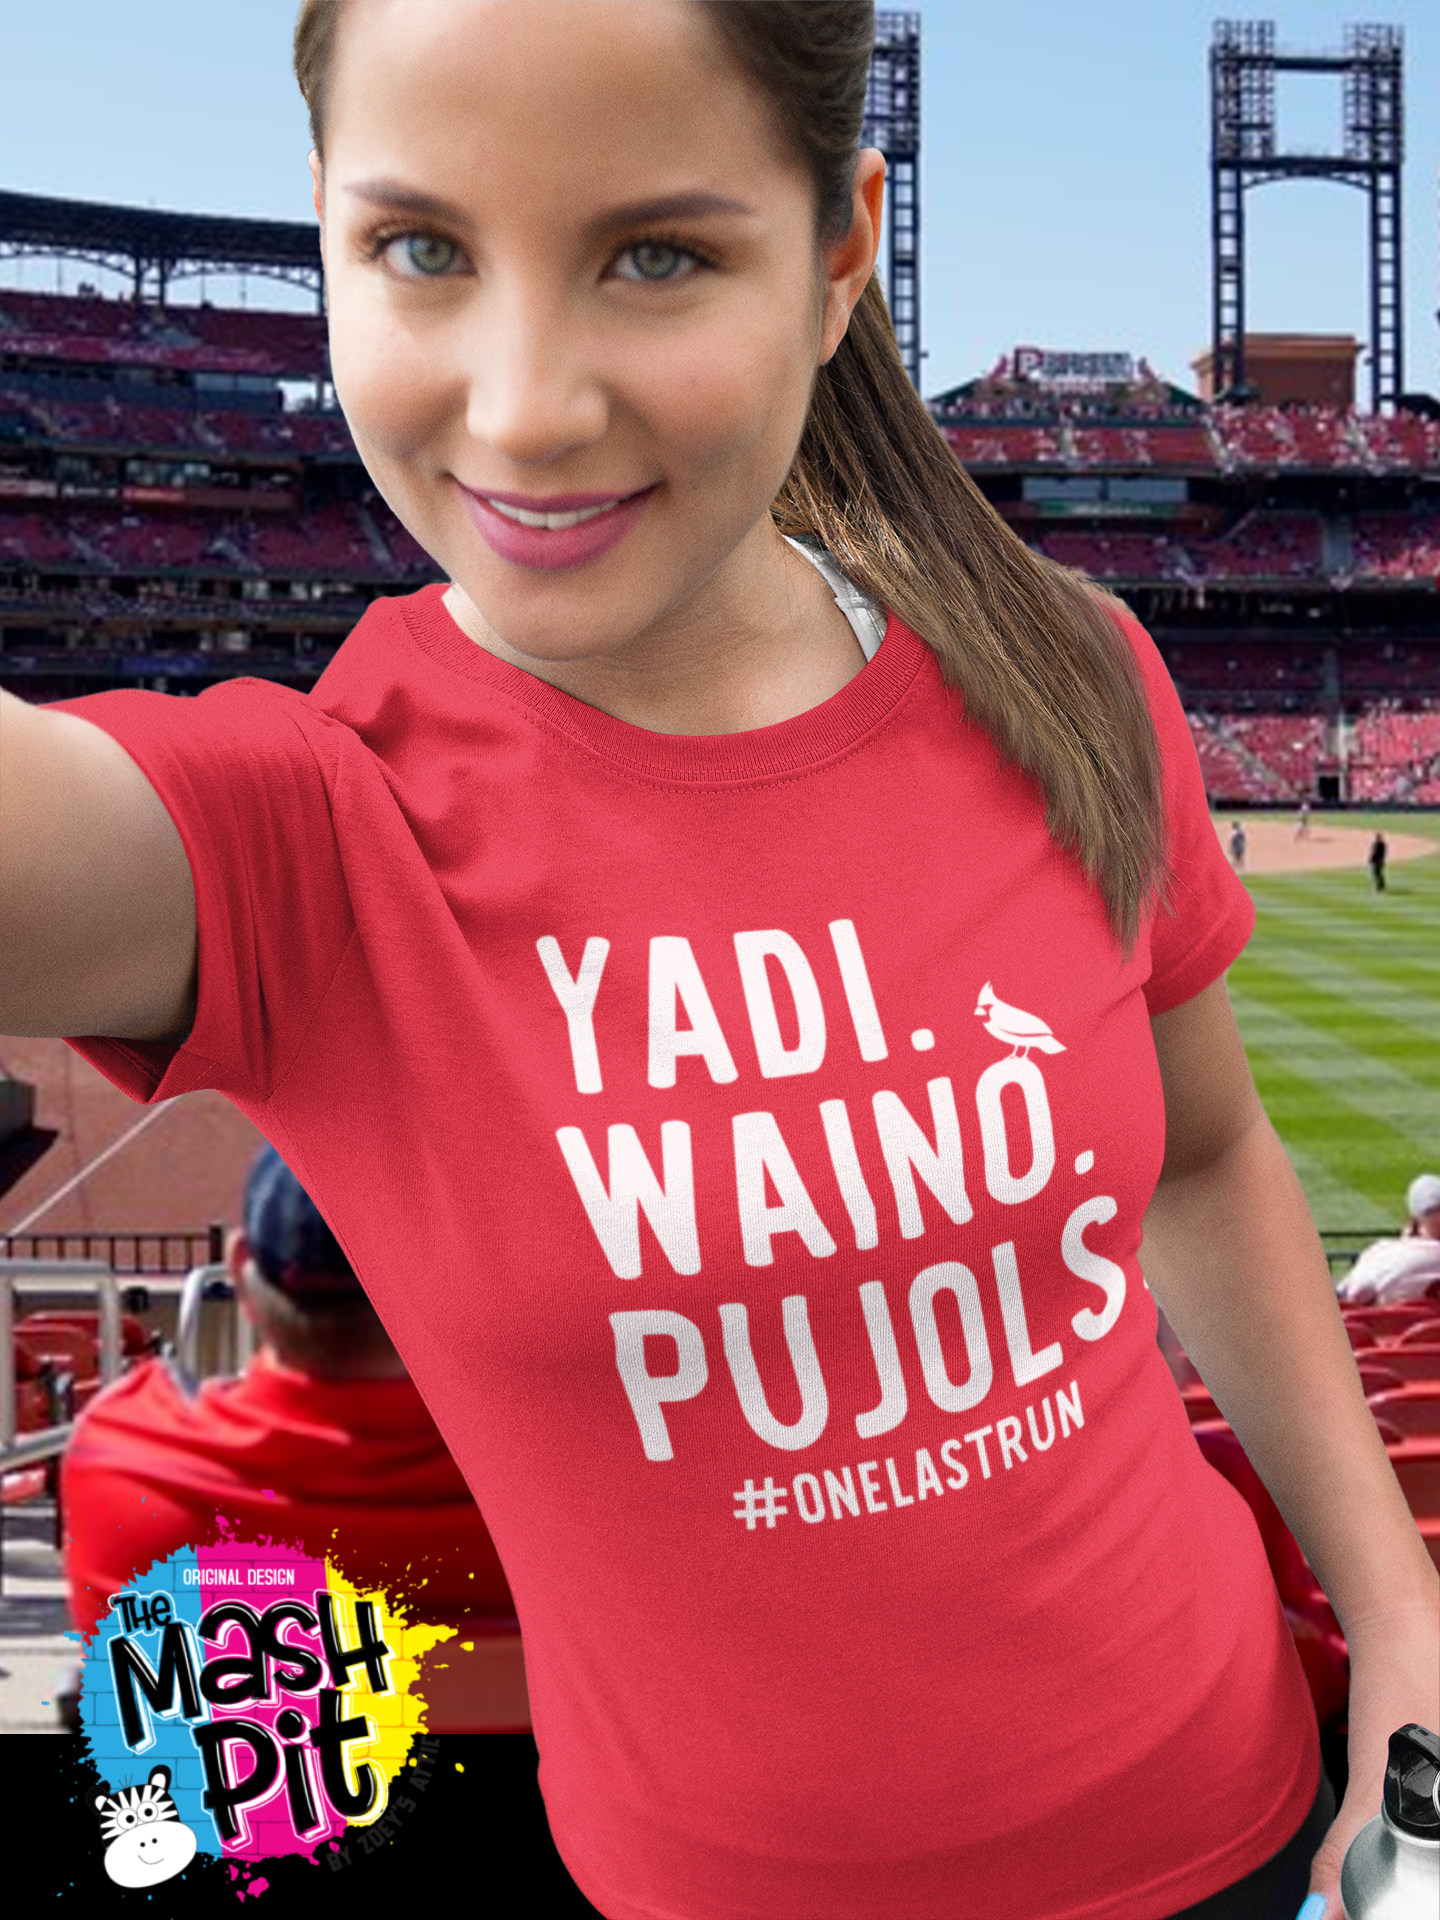 #onelastrun st. louis cardinals baseball greatest players yadi waino pujols  unisex dark Tshirt